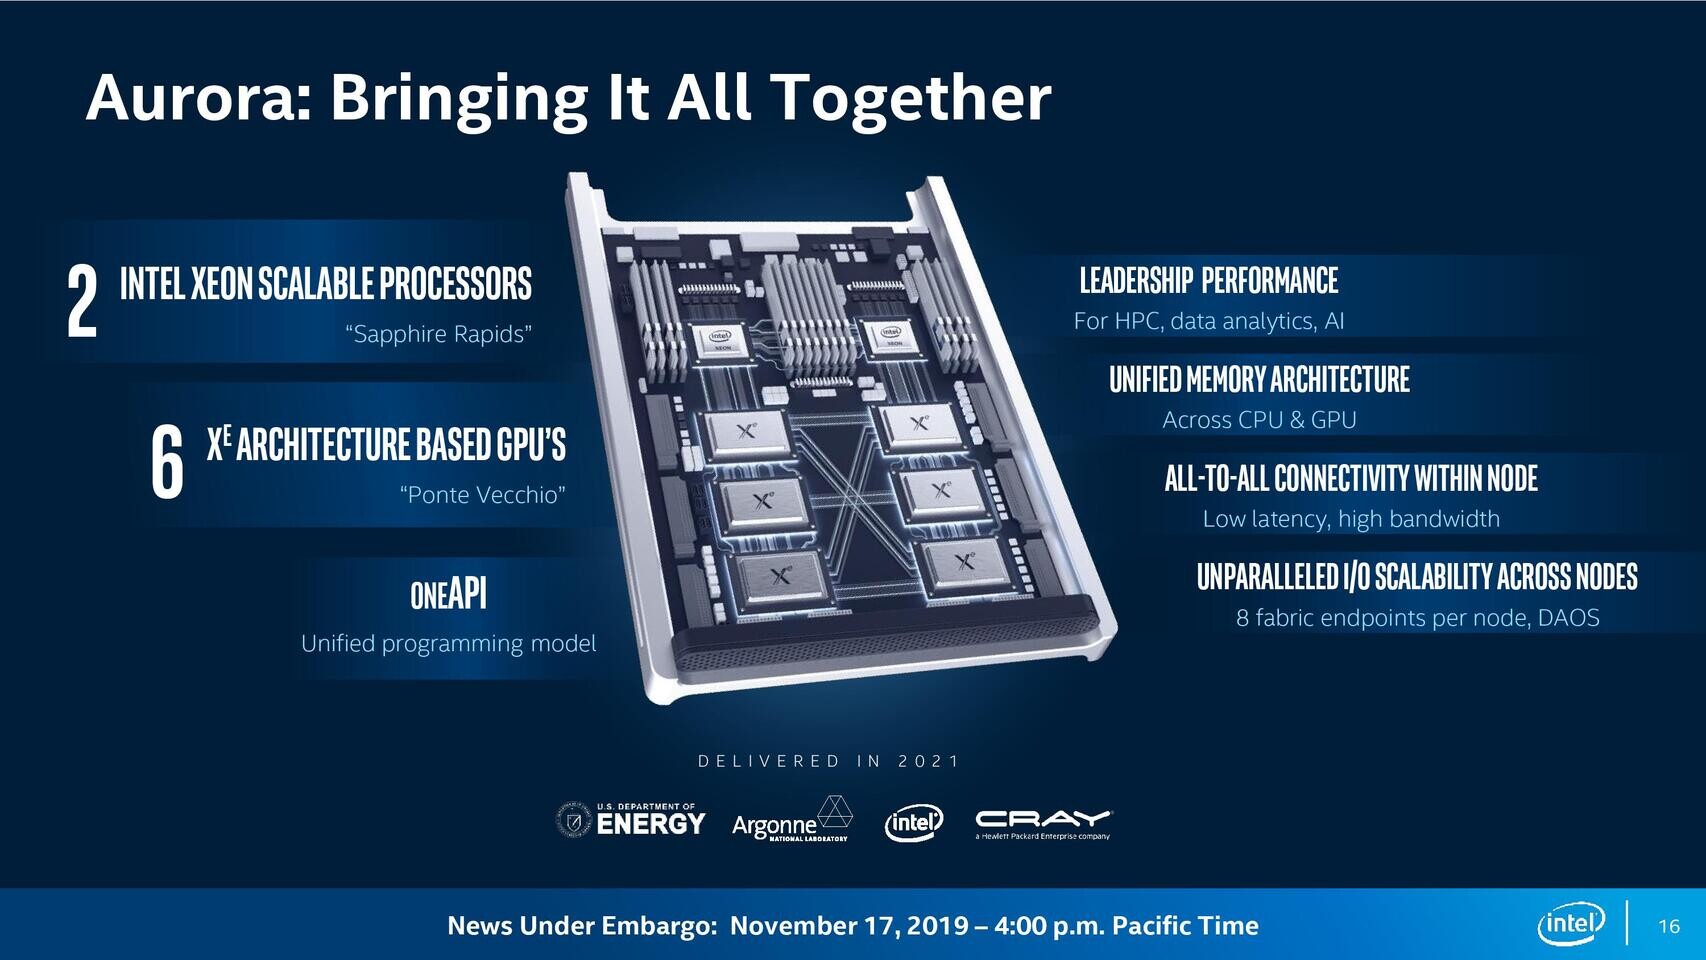 Intel Aurora supercomputer